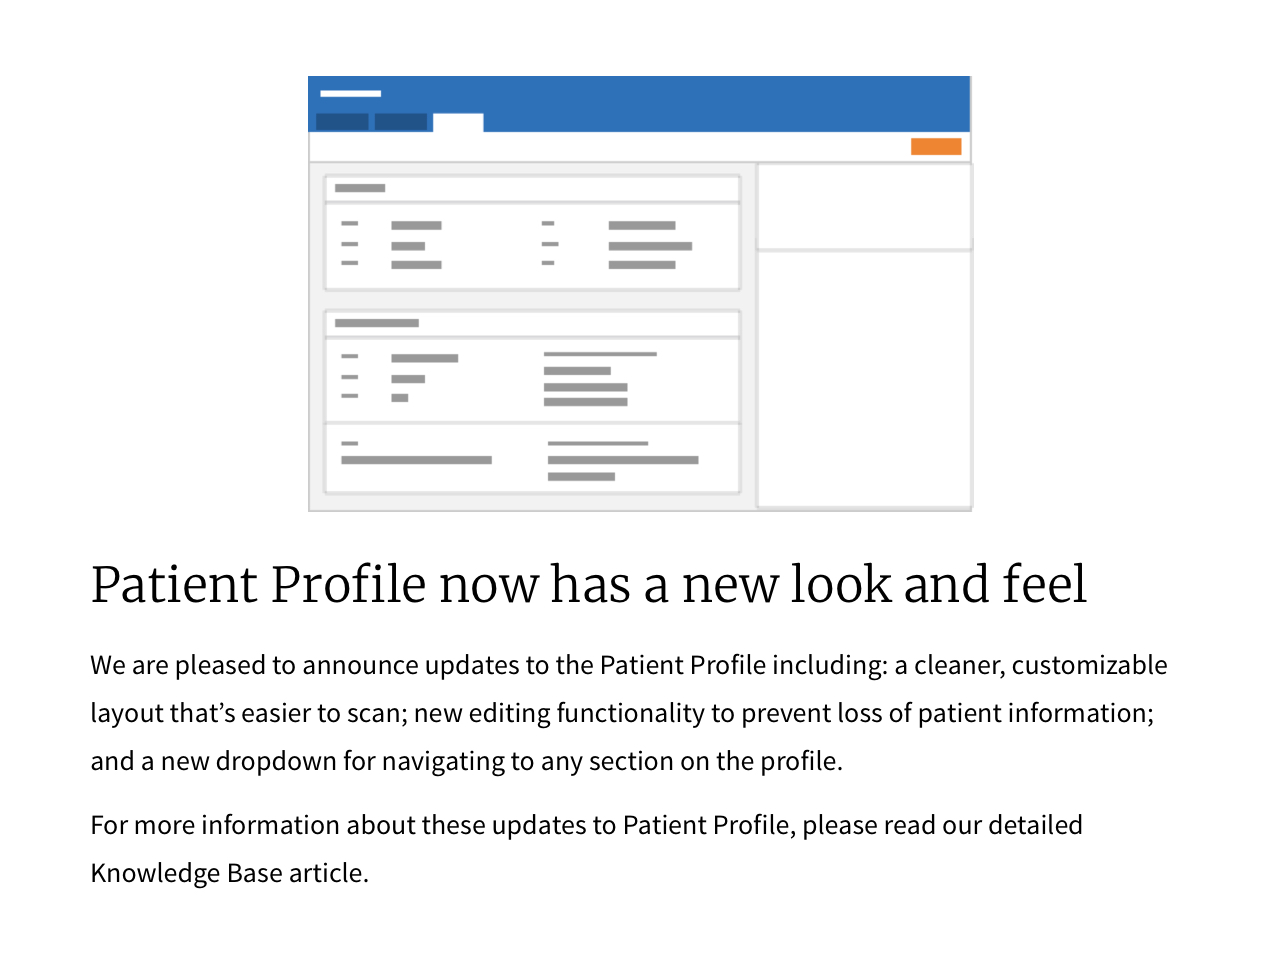 Patient Profile New Look